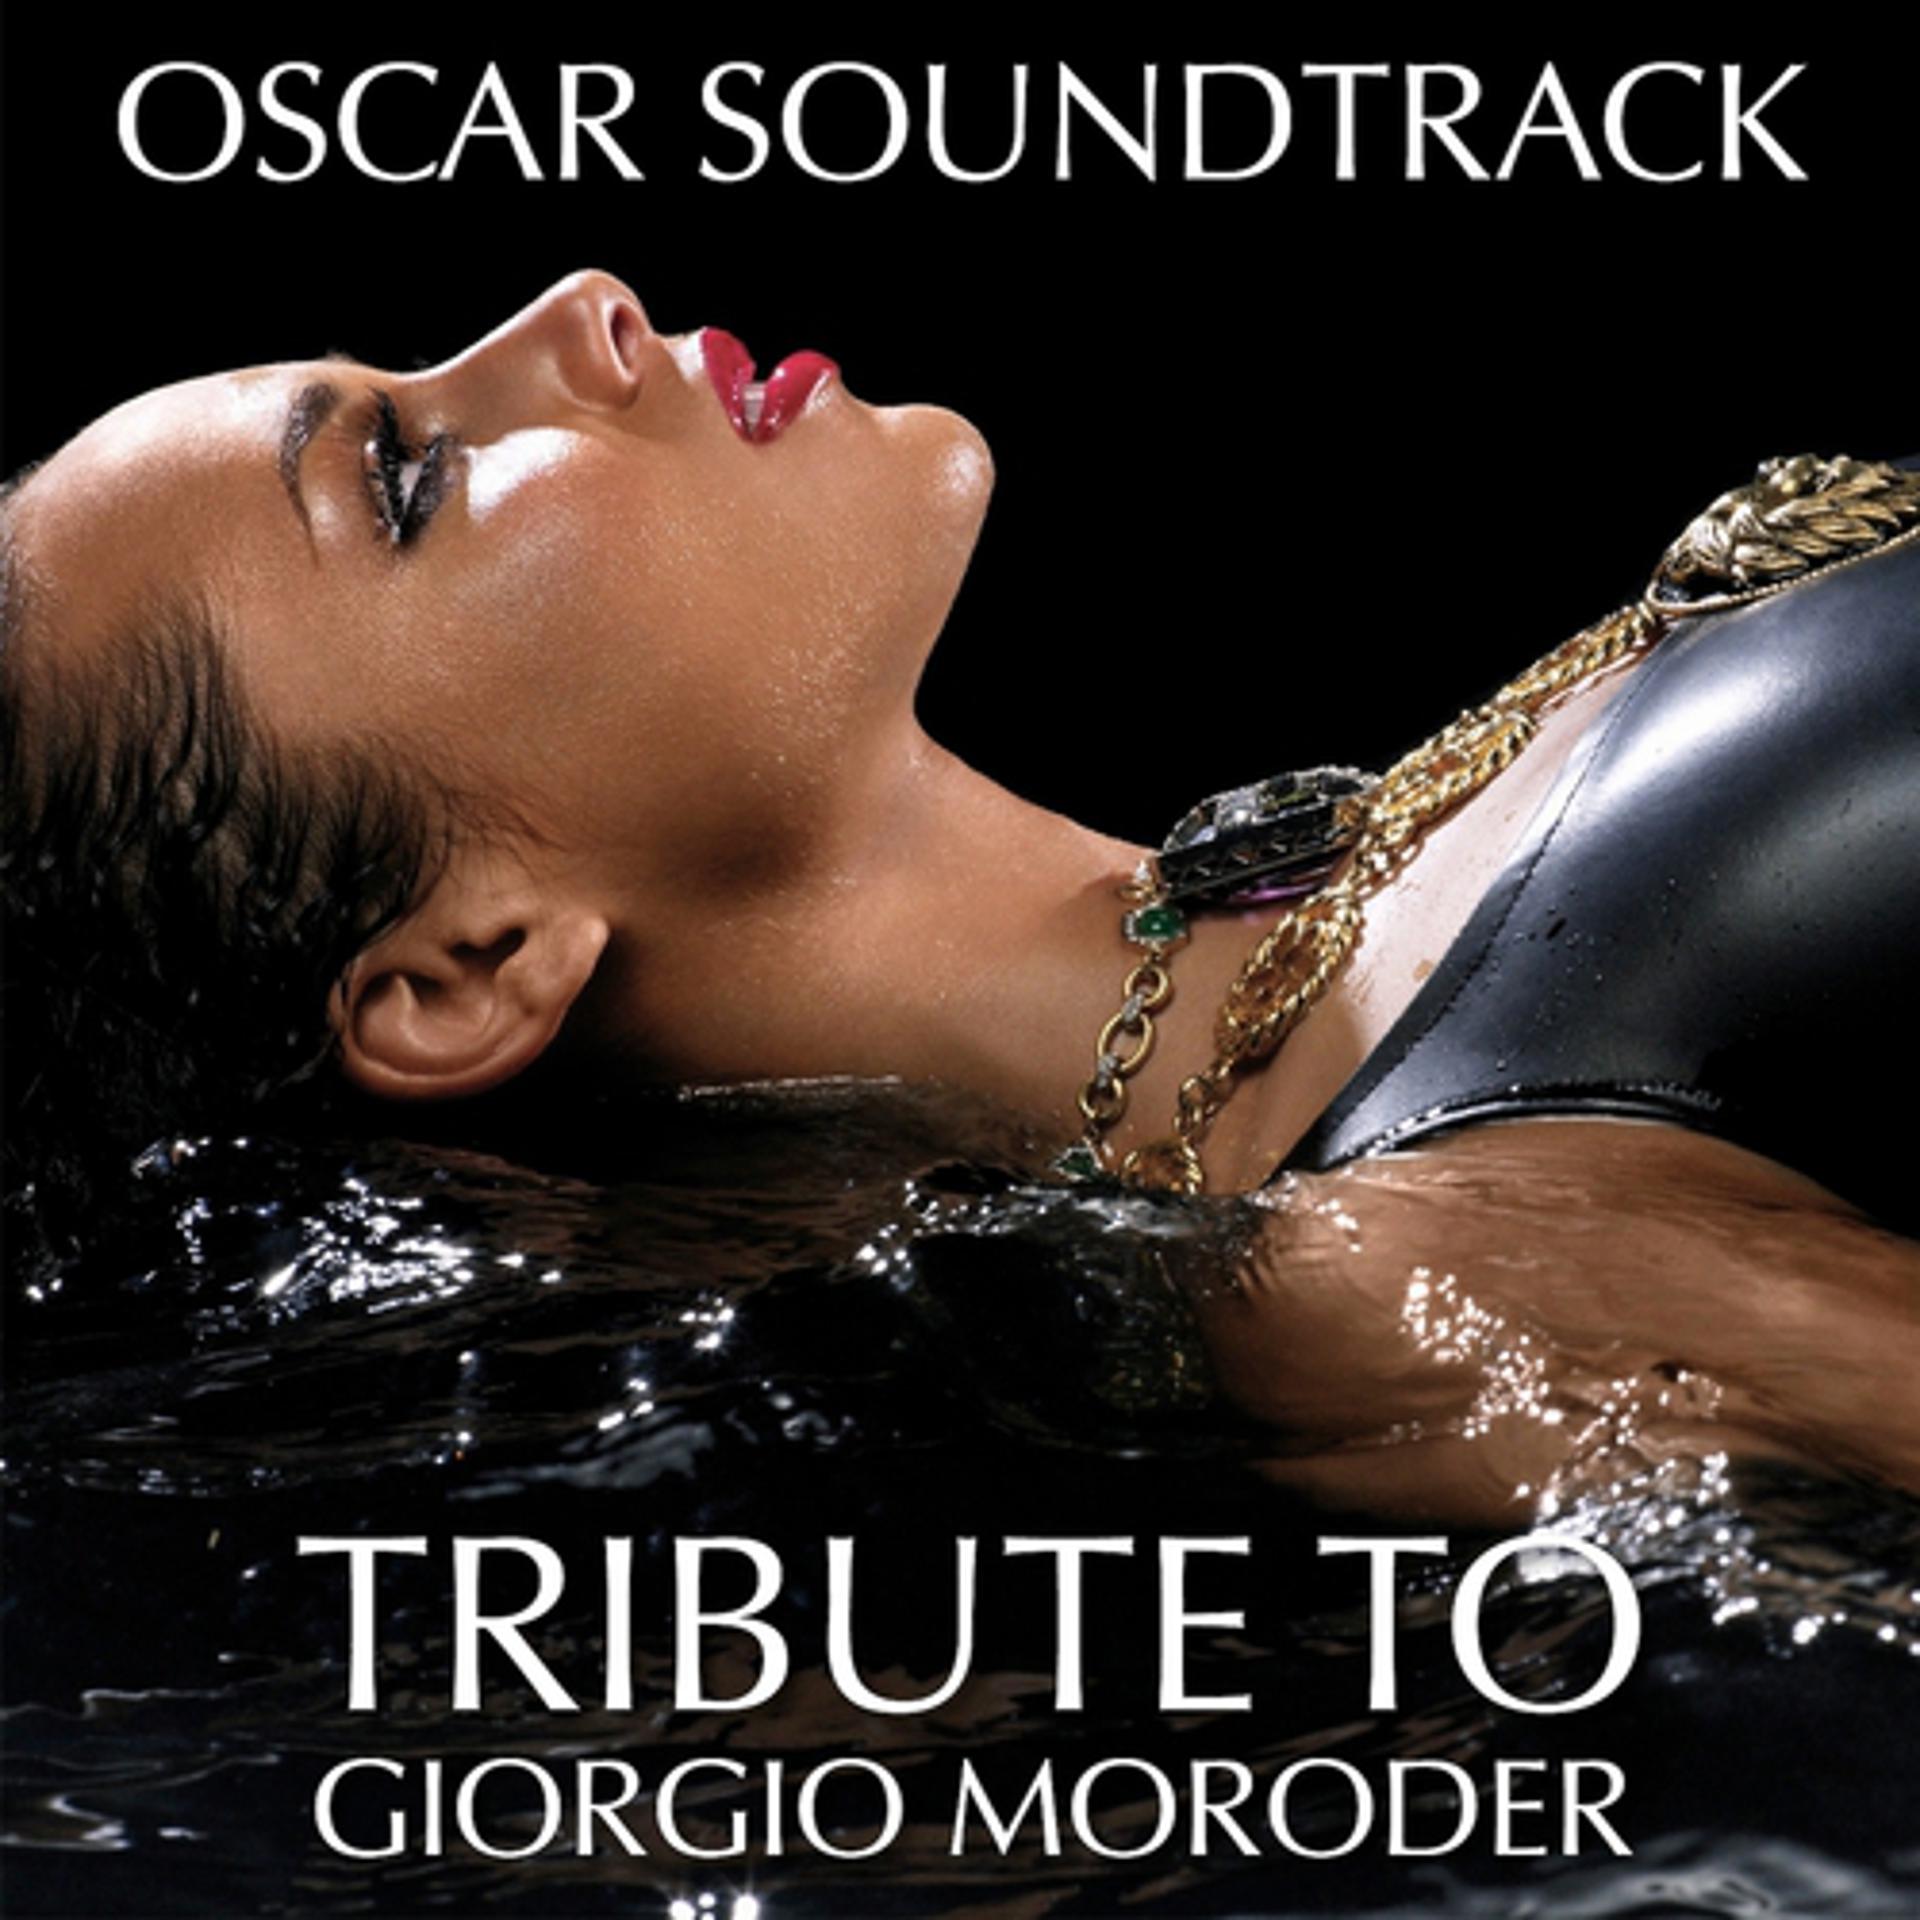 Постер альбома Soundtrack Oscar - Tribute to Giorgio Moroder